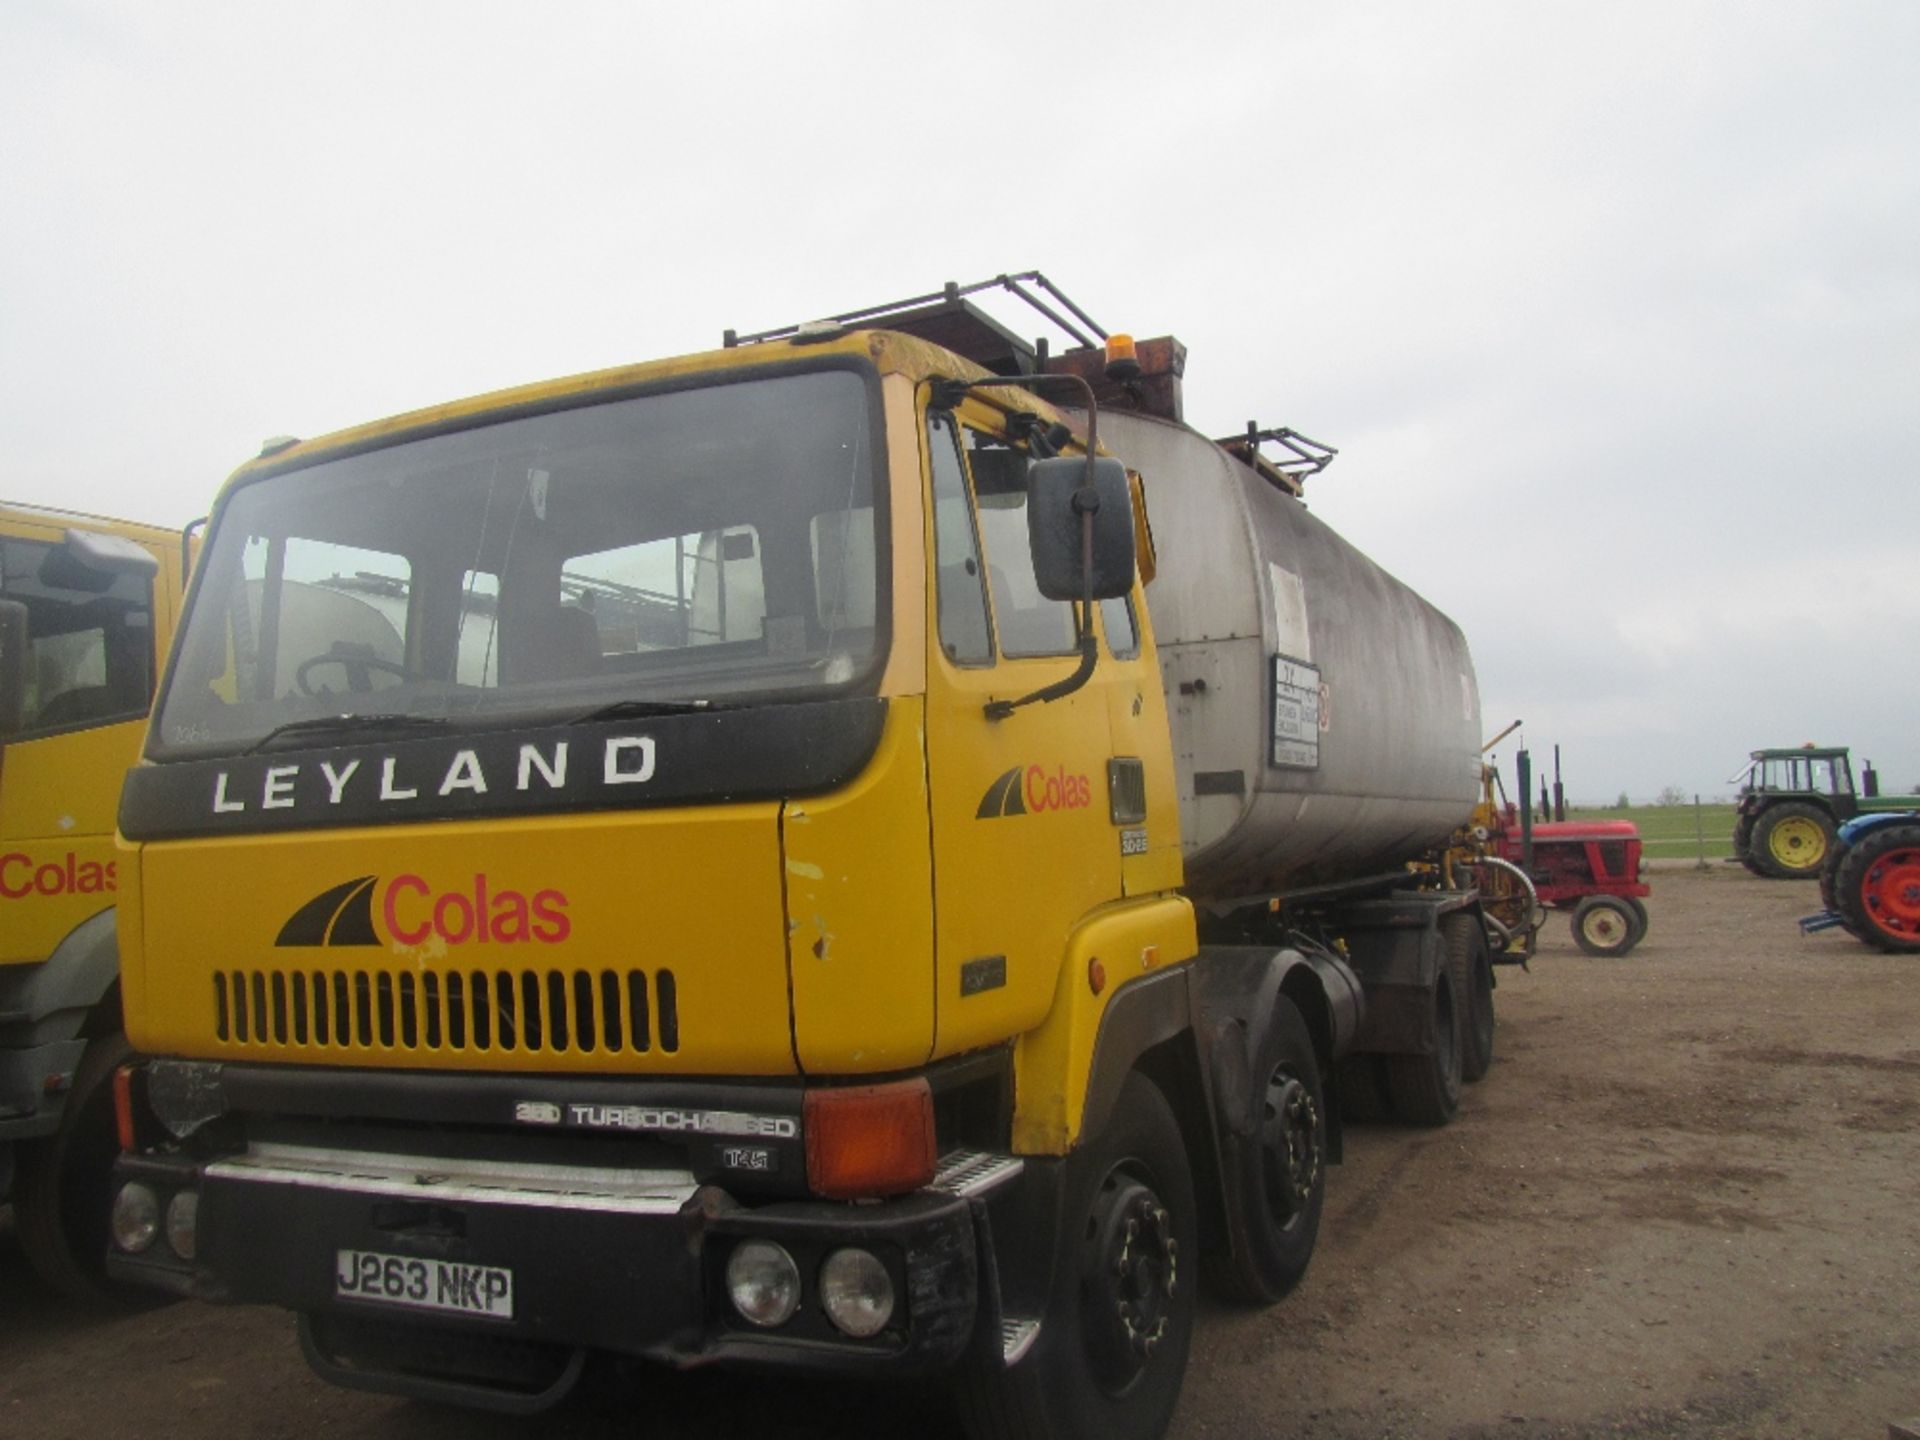 Leyland 8x4 18600 ltr Tar Sprayer c/w bitumen tank, pheonix variable width spray Reg. No. J263 NKP